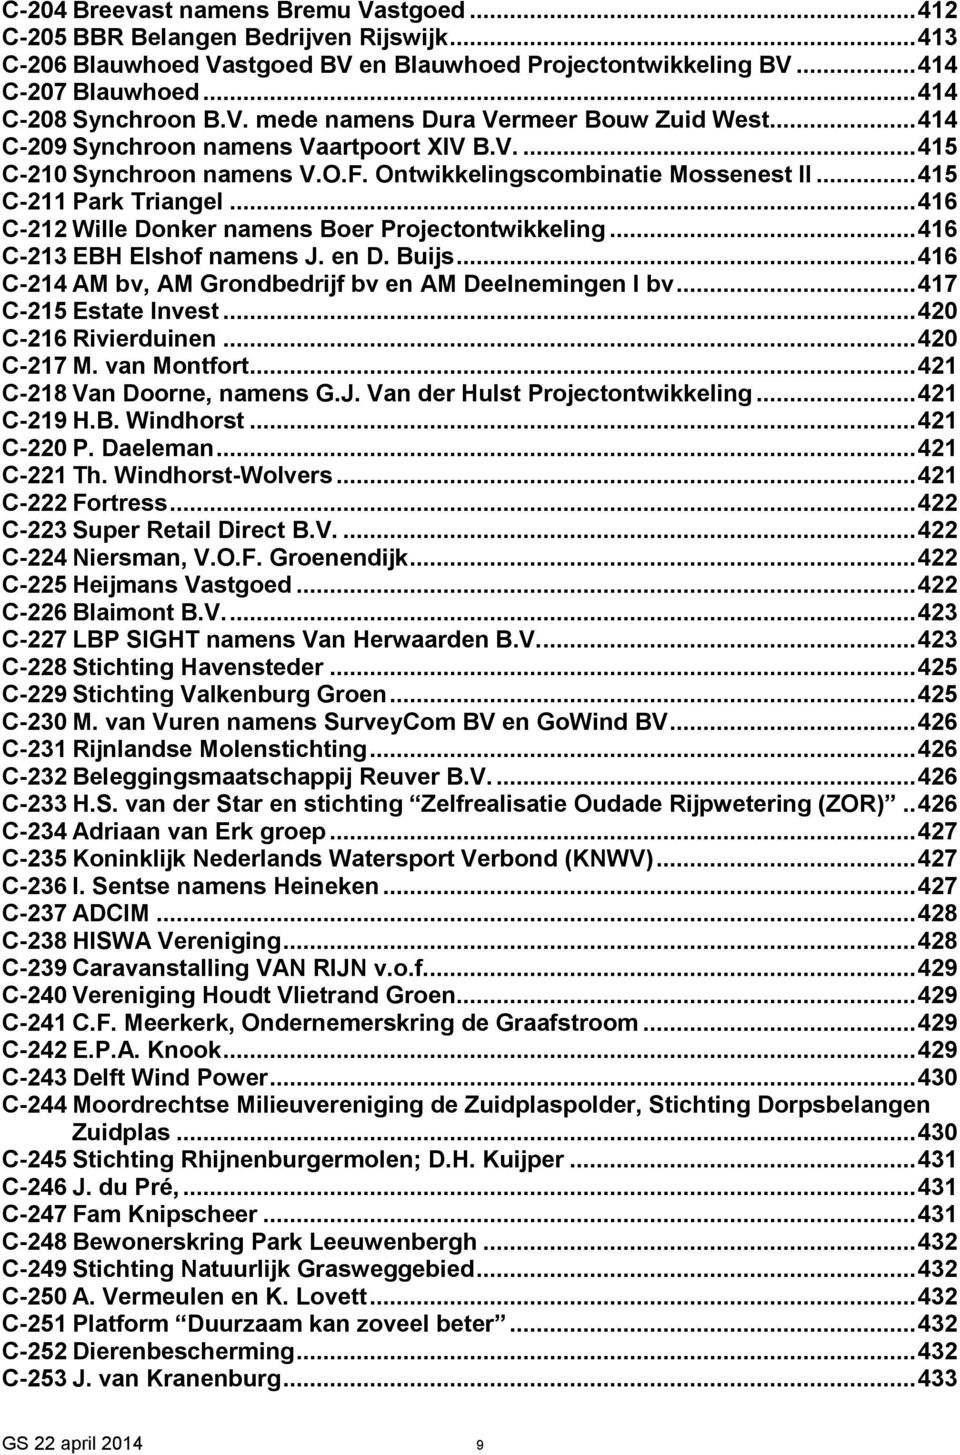 .. 416 C-212 Wille Donker namens Boer Projectontwikkeling... 416 C-213 EBH Elshof namens J. en D. Buijs... 416 C-214 AM bv, AM Grondbedrijf bv en AM Deelnemingen I bv... 417 C-215 Estate Invest.